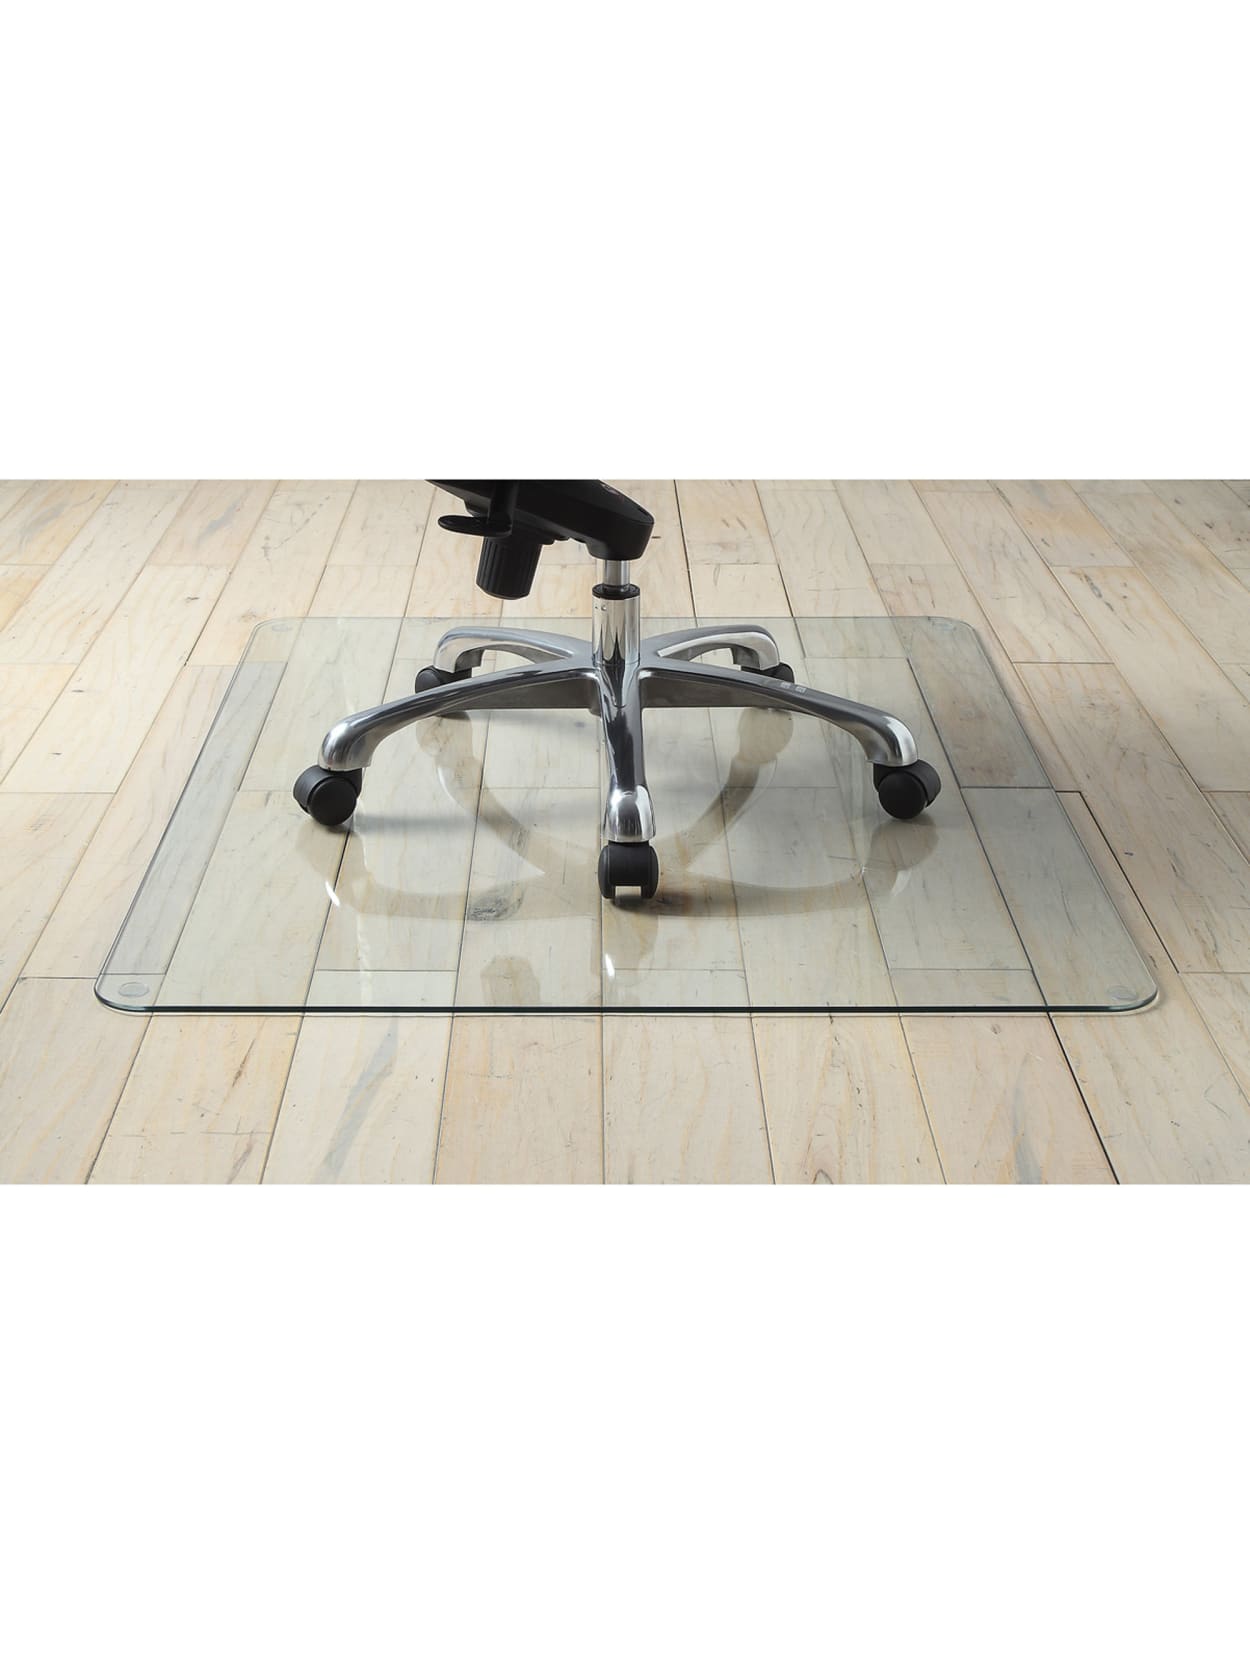 office chair mat for hardwood floors costco